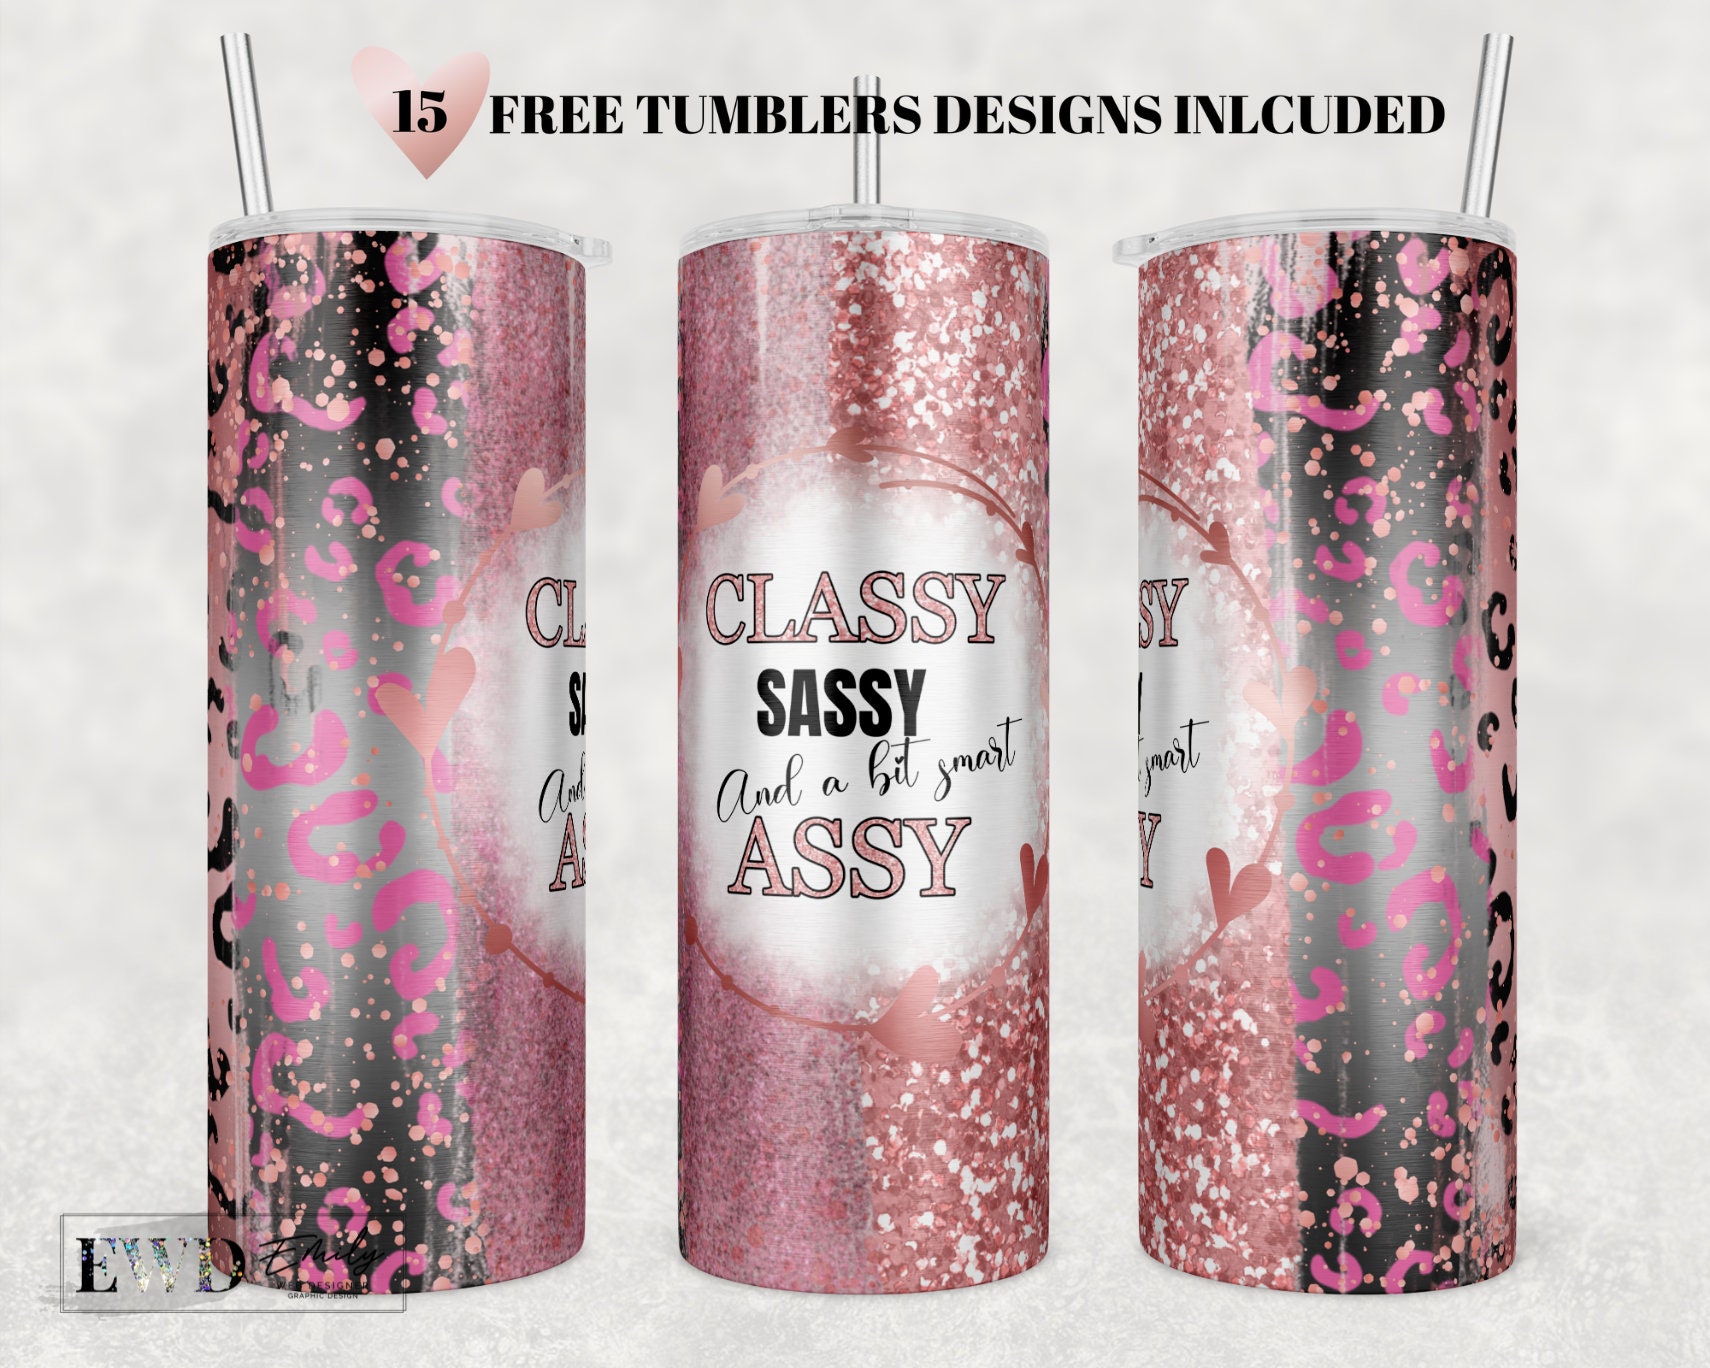 RTIC Mardi Gras Tumbler 20 oz & 30 oz. – Sassy Boutique Designs